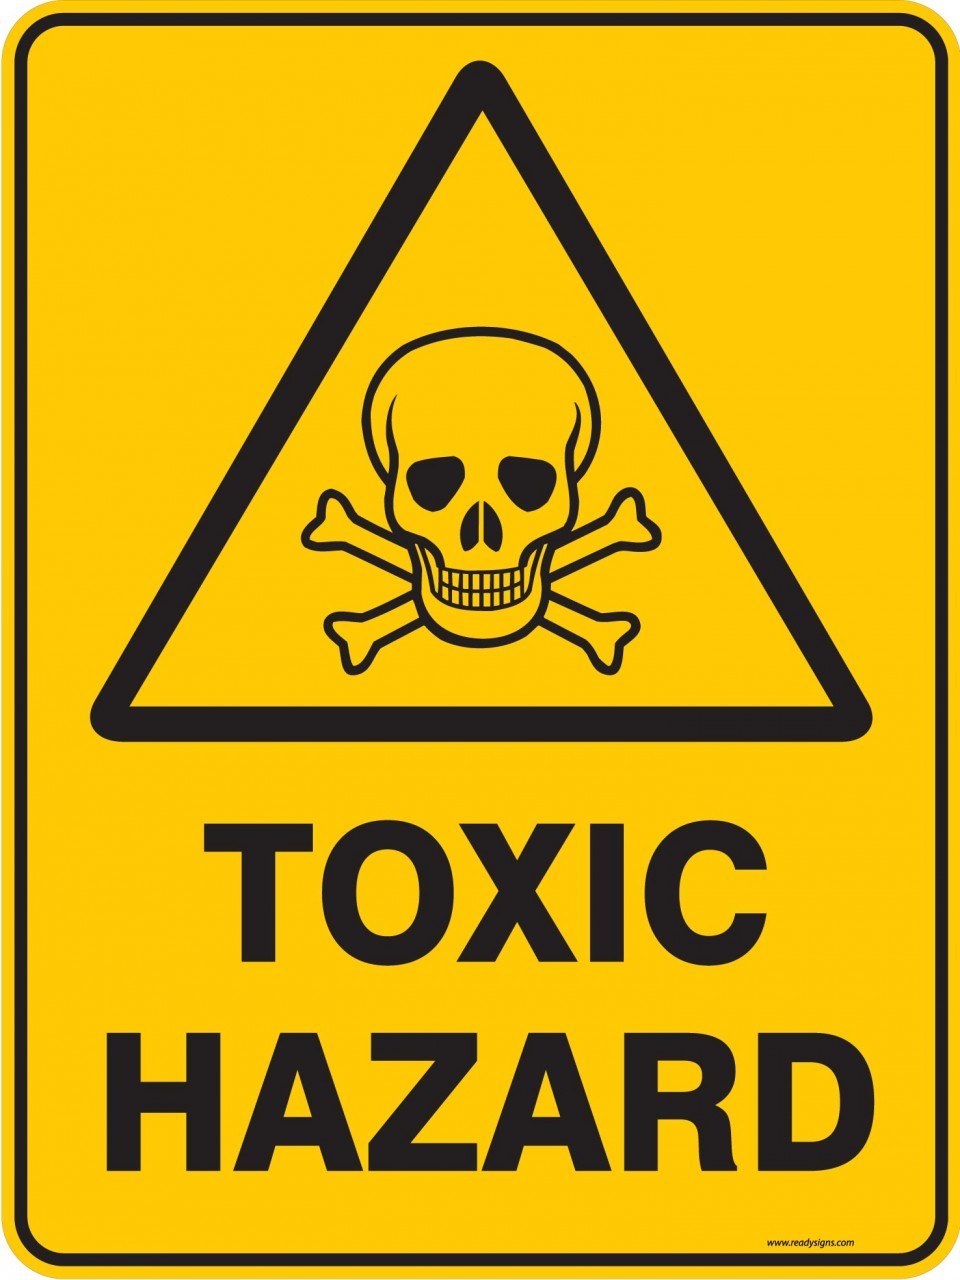 Warning Sign - TOXIC HAZARD - Property Signs